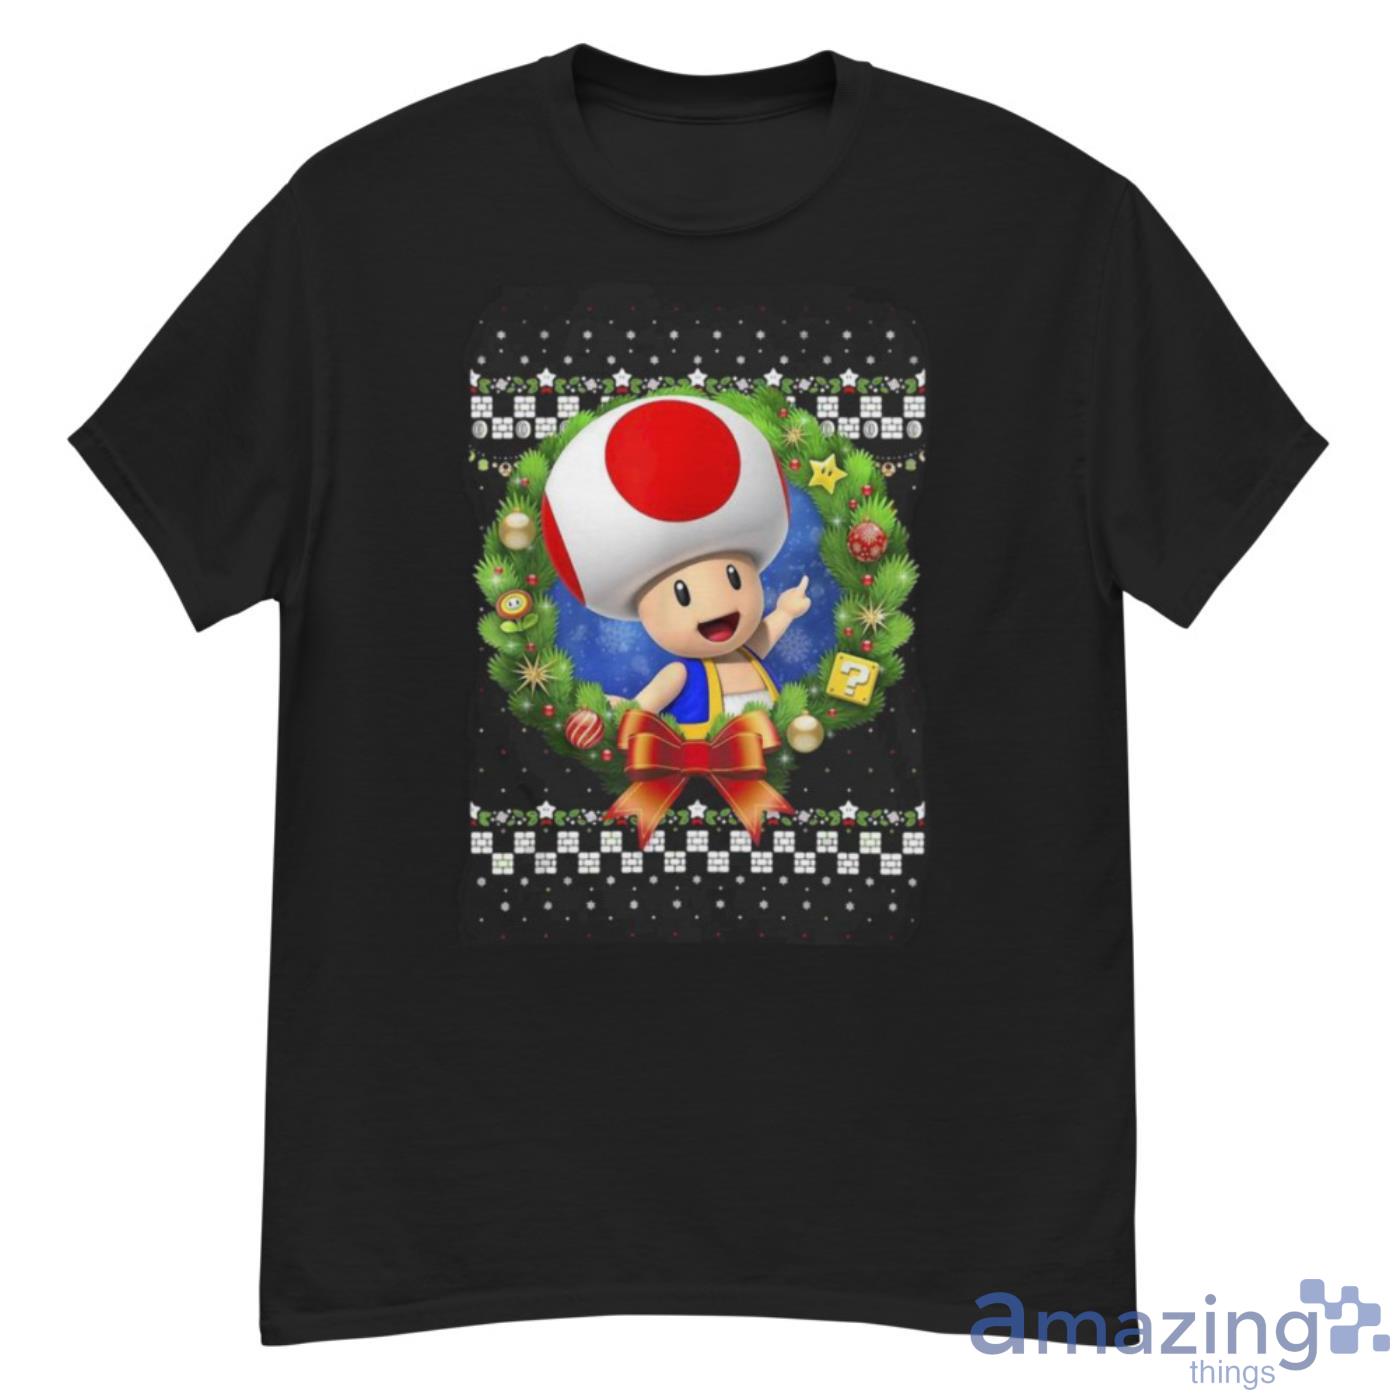 Super Mario 3D Toad Christmas Wreath Graphic Shirt - G500 Men’s Classic T-Shirt